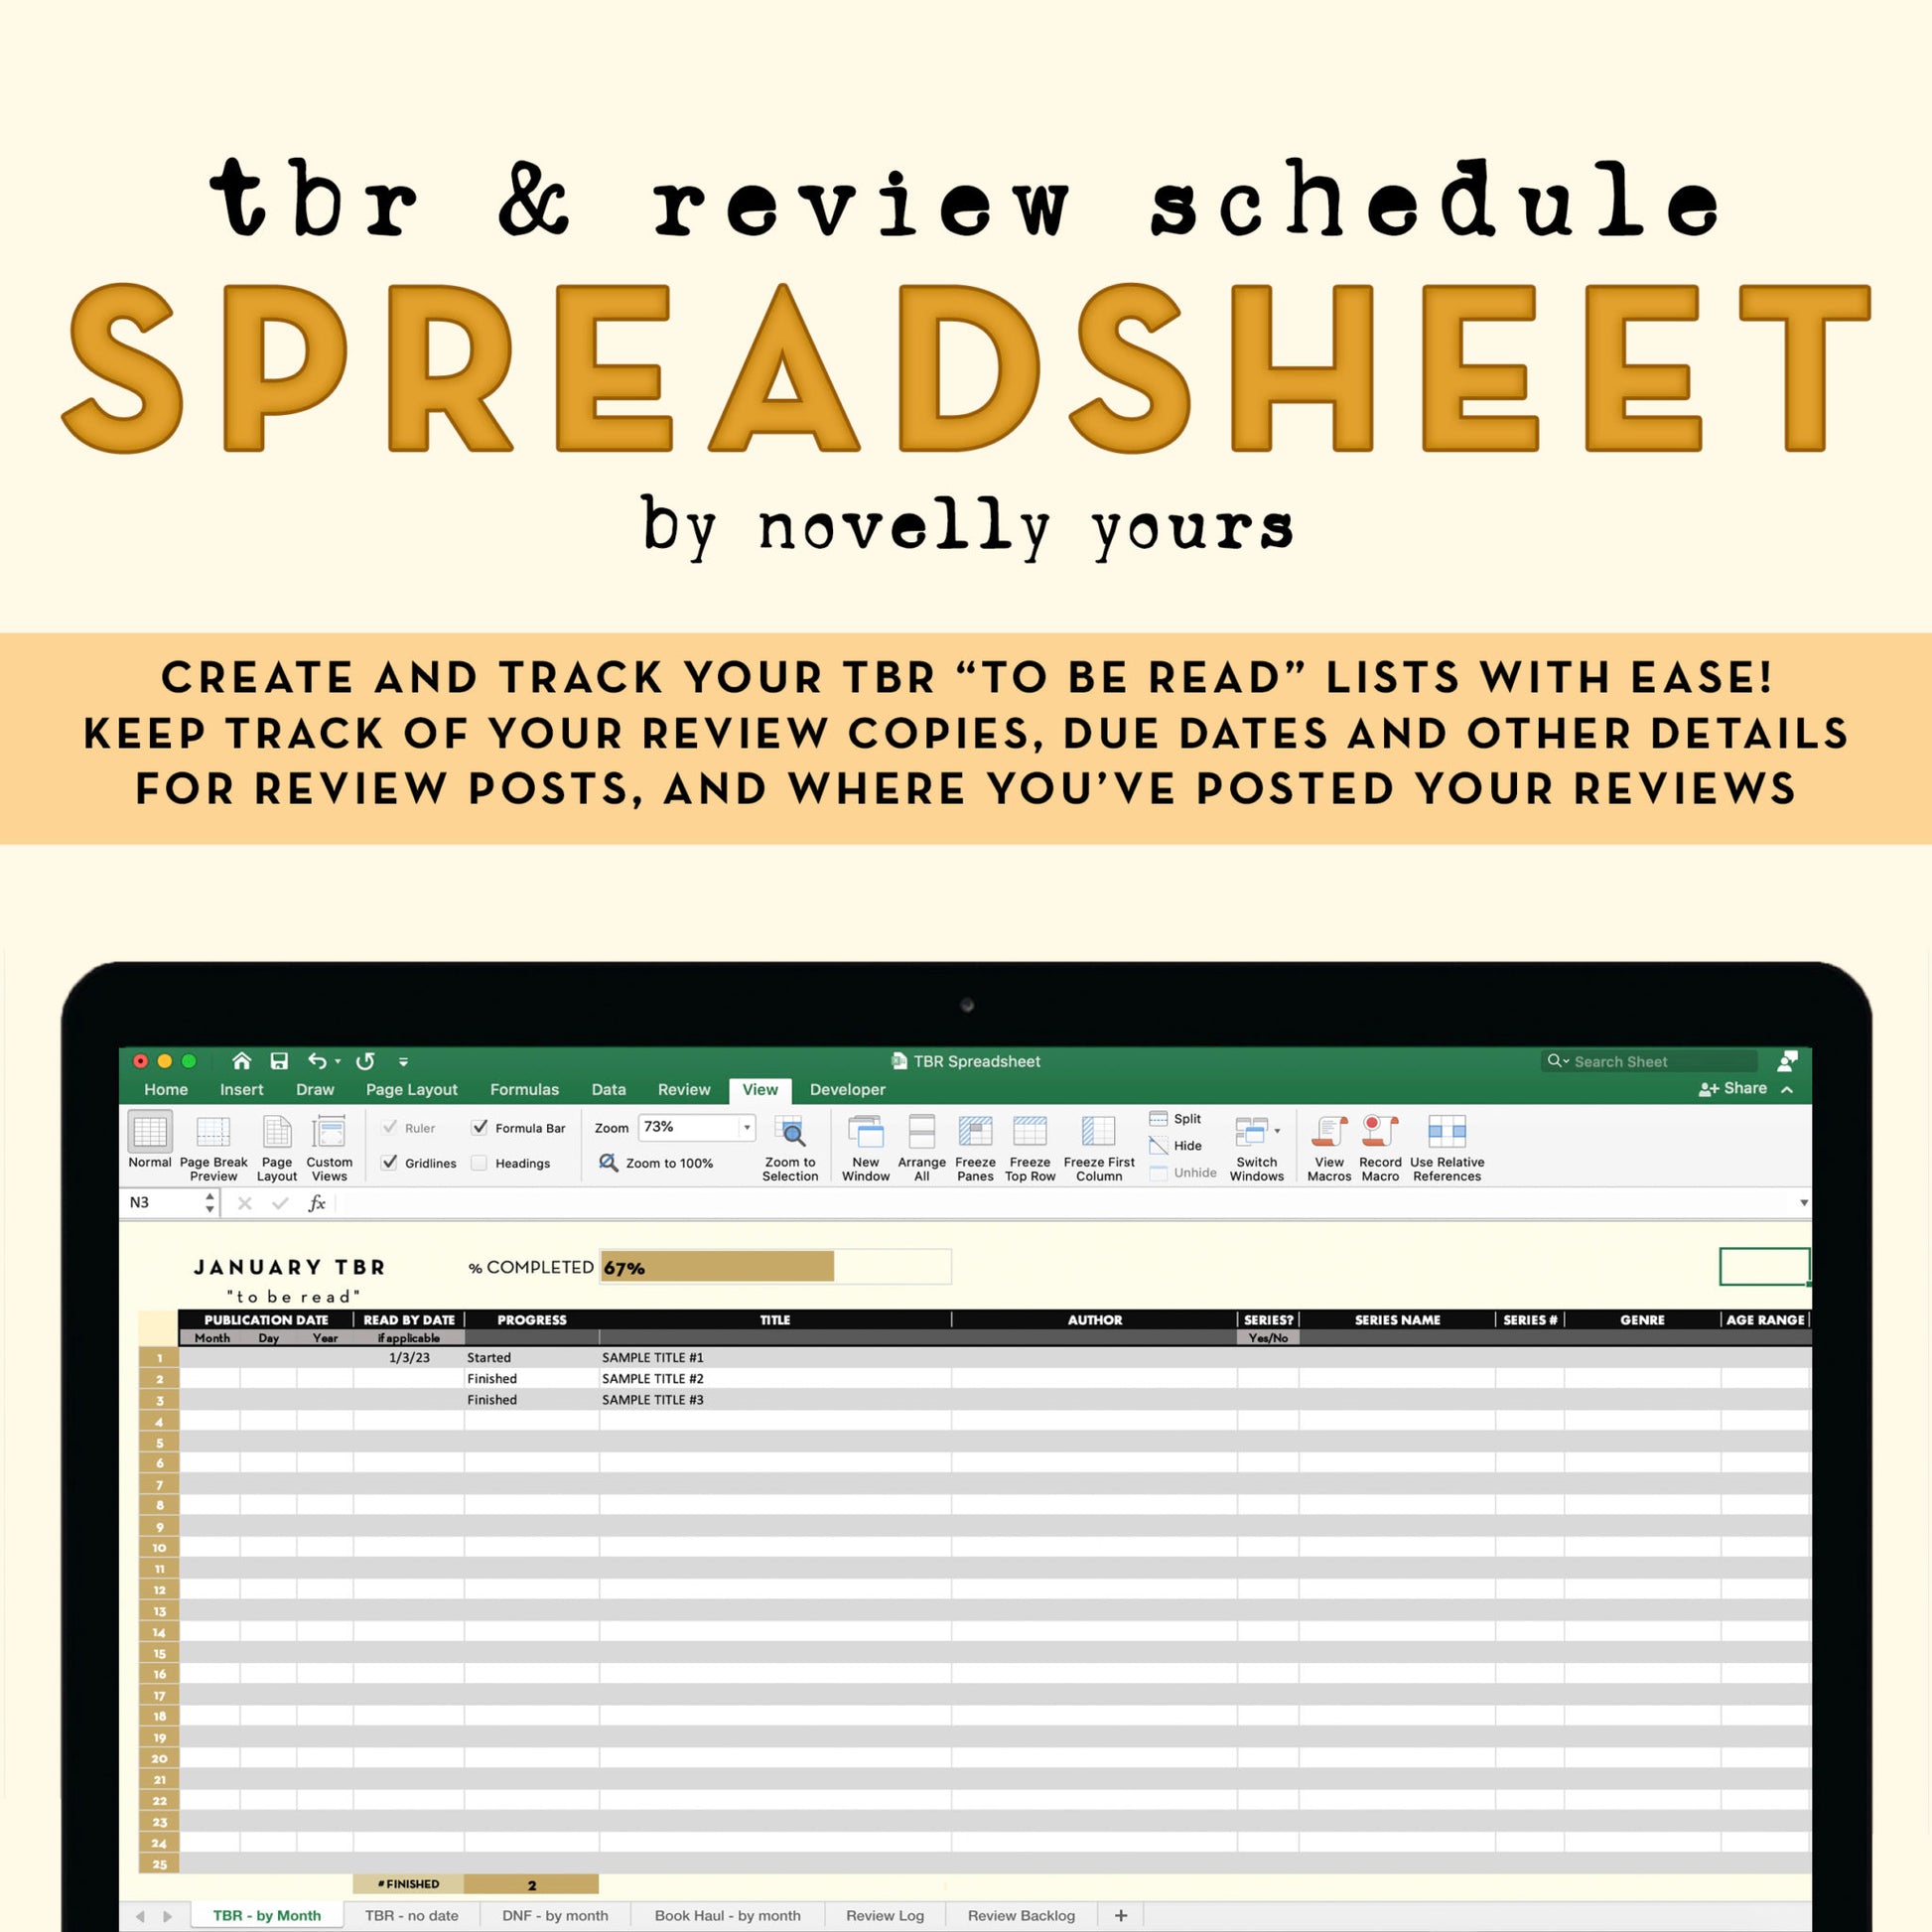 TBR & Review Schedule spreadsheet